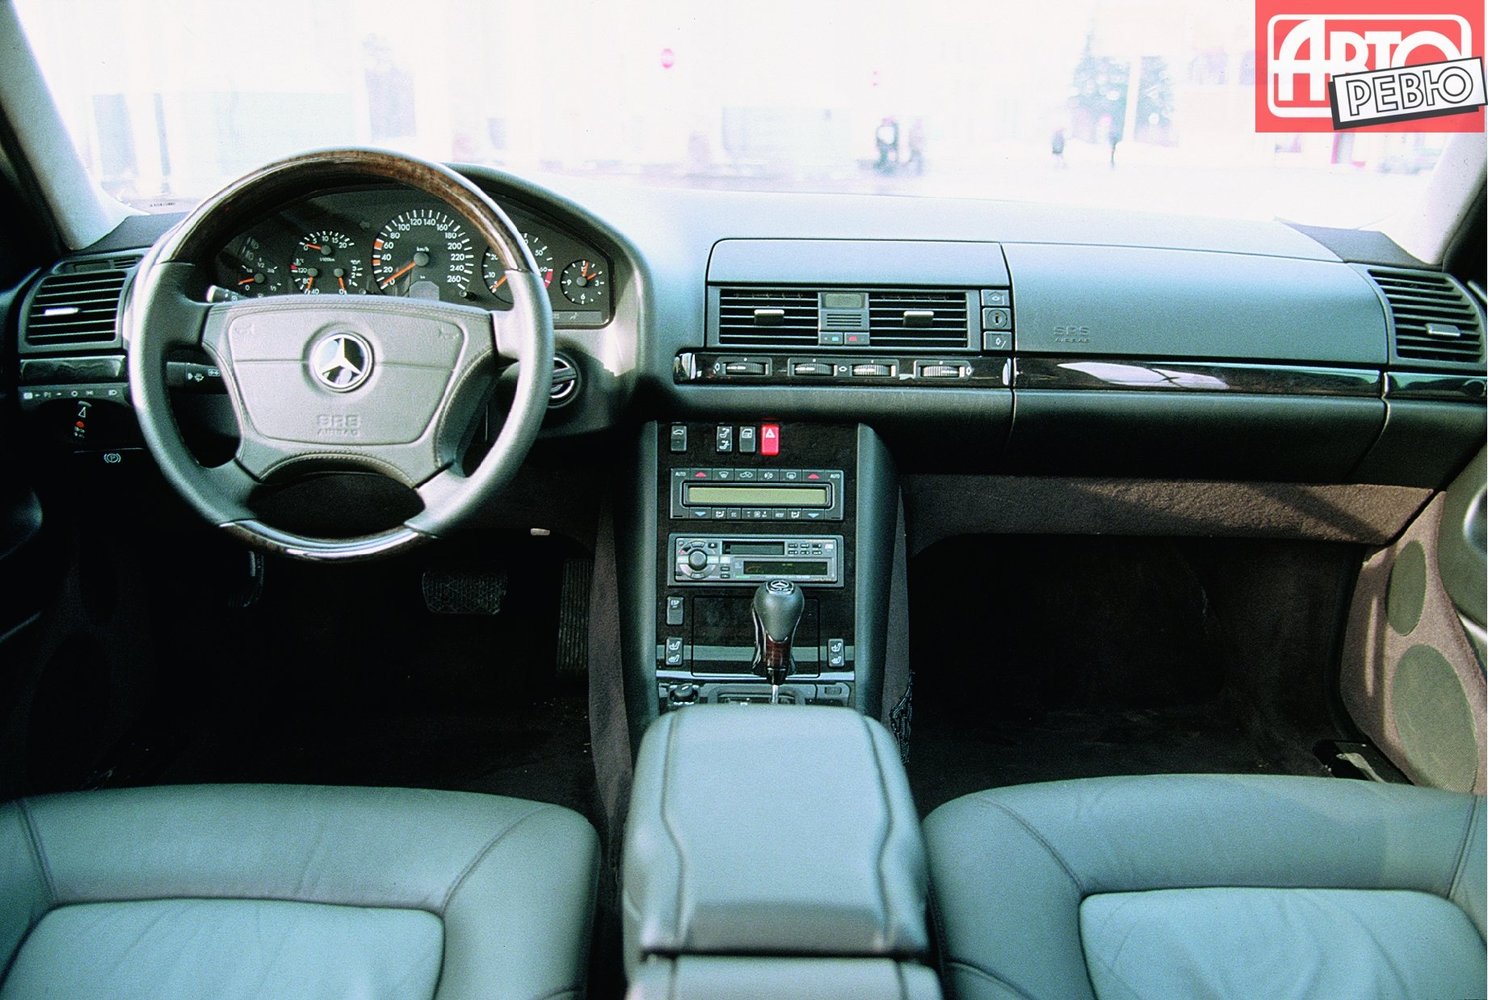 седан Long Mercedes-Benz S-klasse 1995 - 1998г выпуска модификация 3.2 AT (231 л.с.)